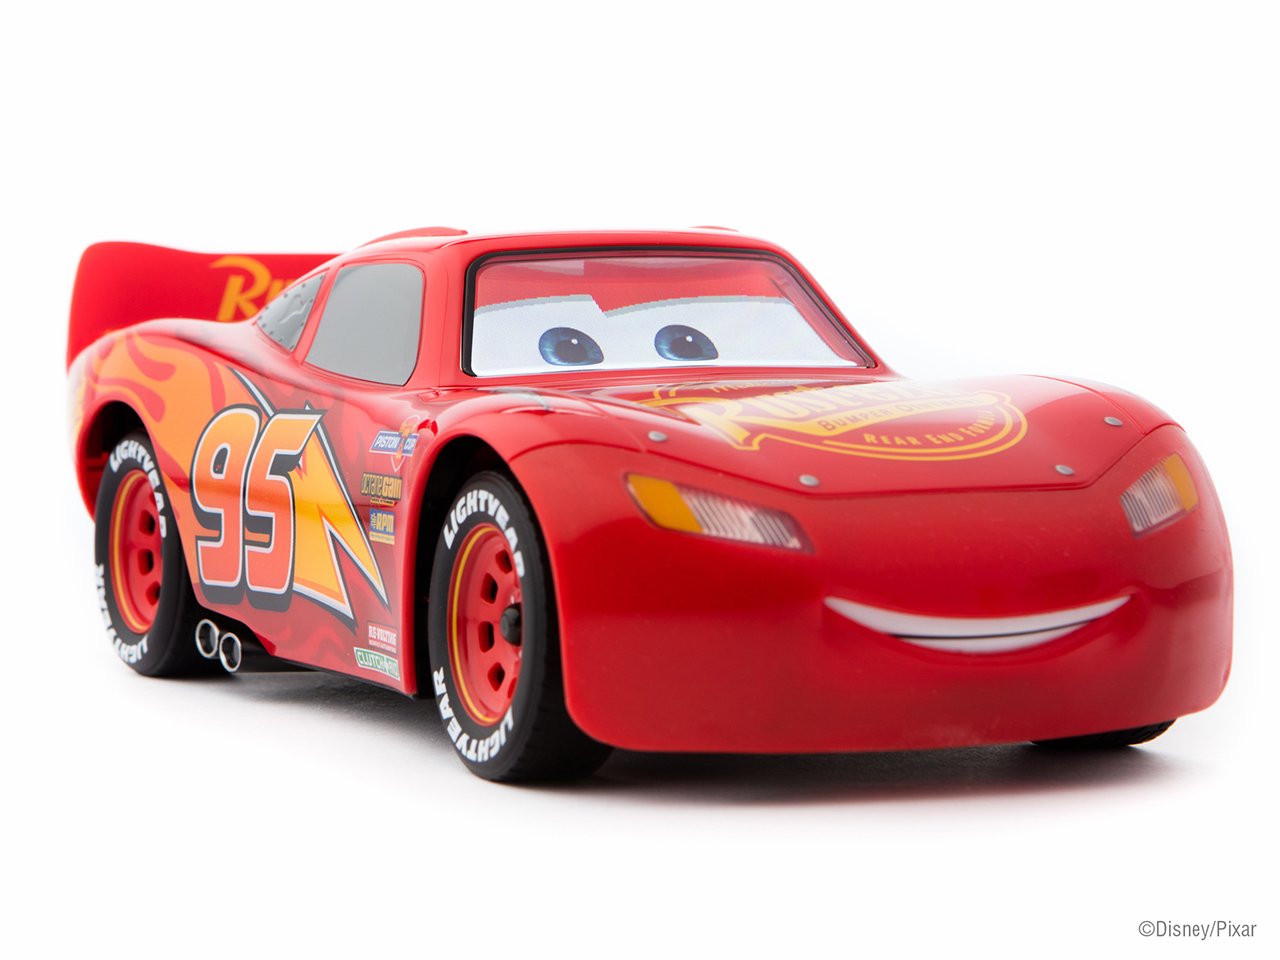 Ultimate Lightning McQueen RC Car by Sphero